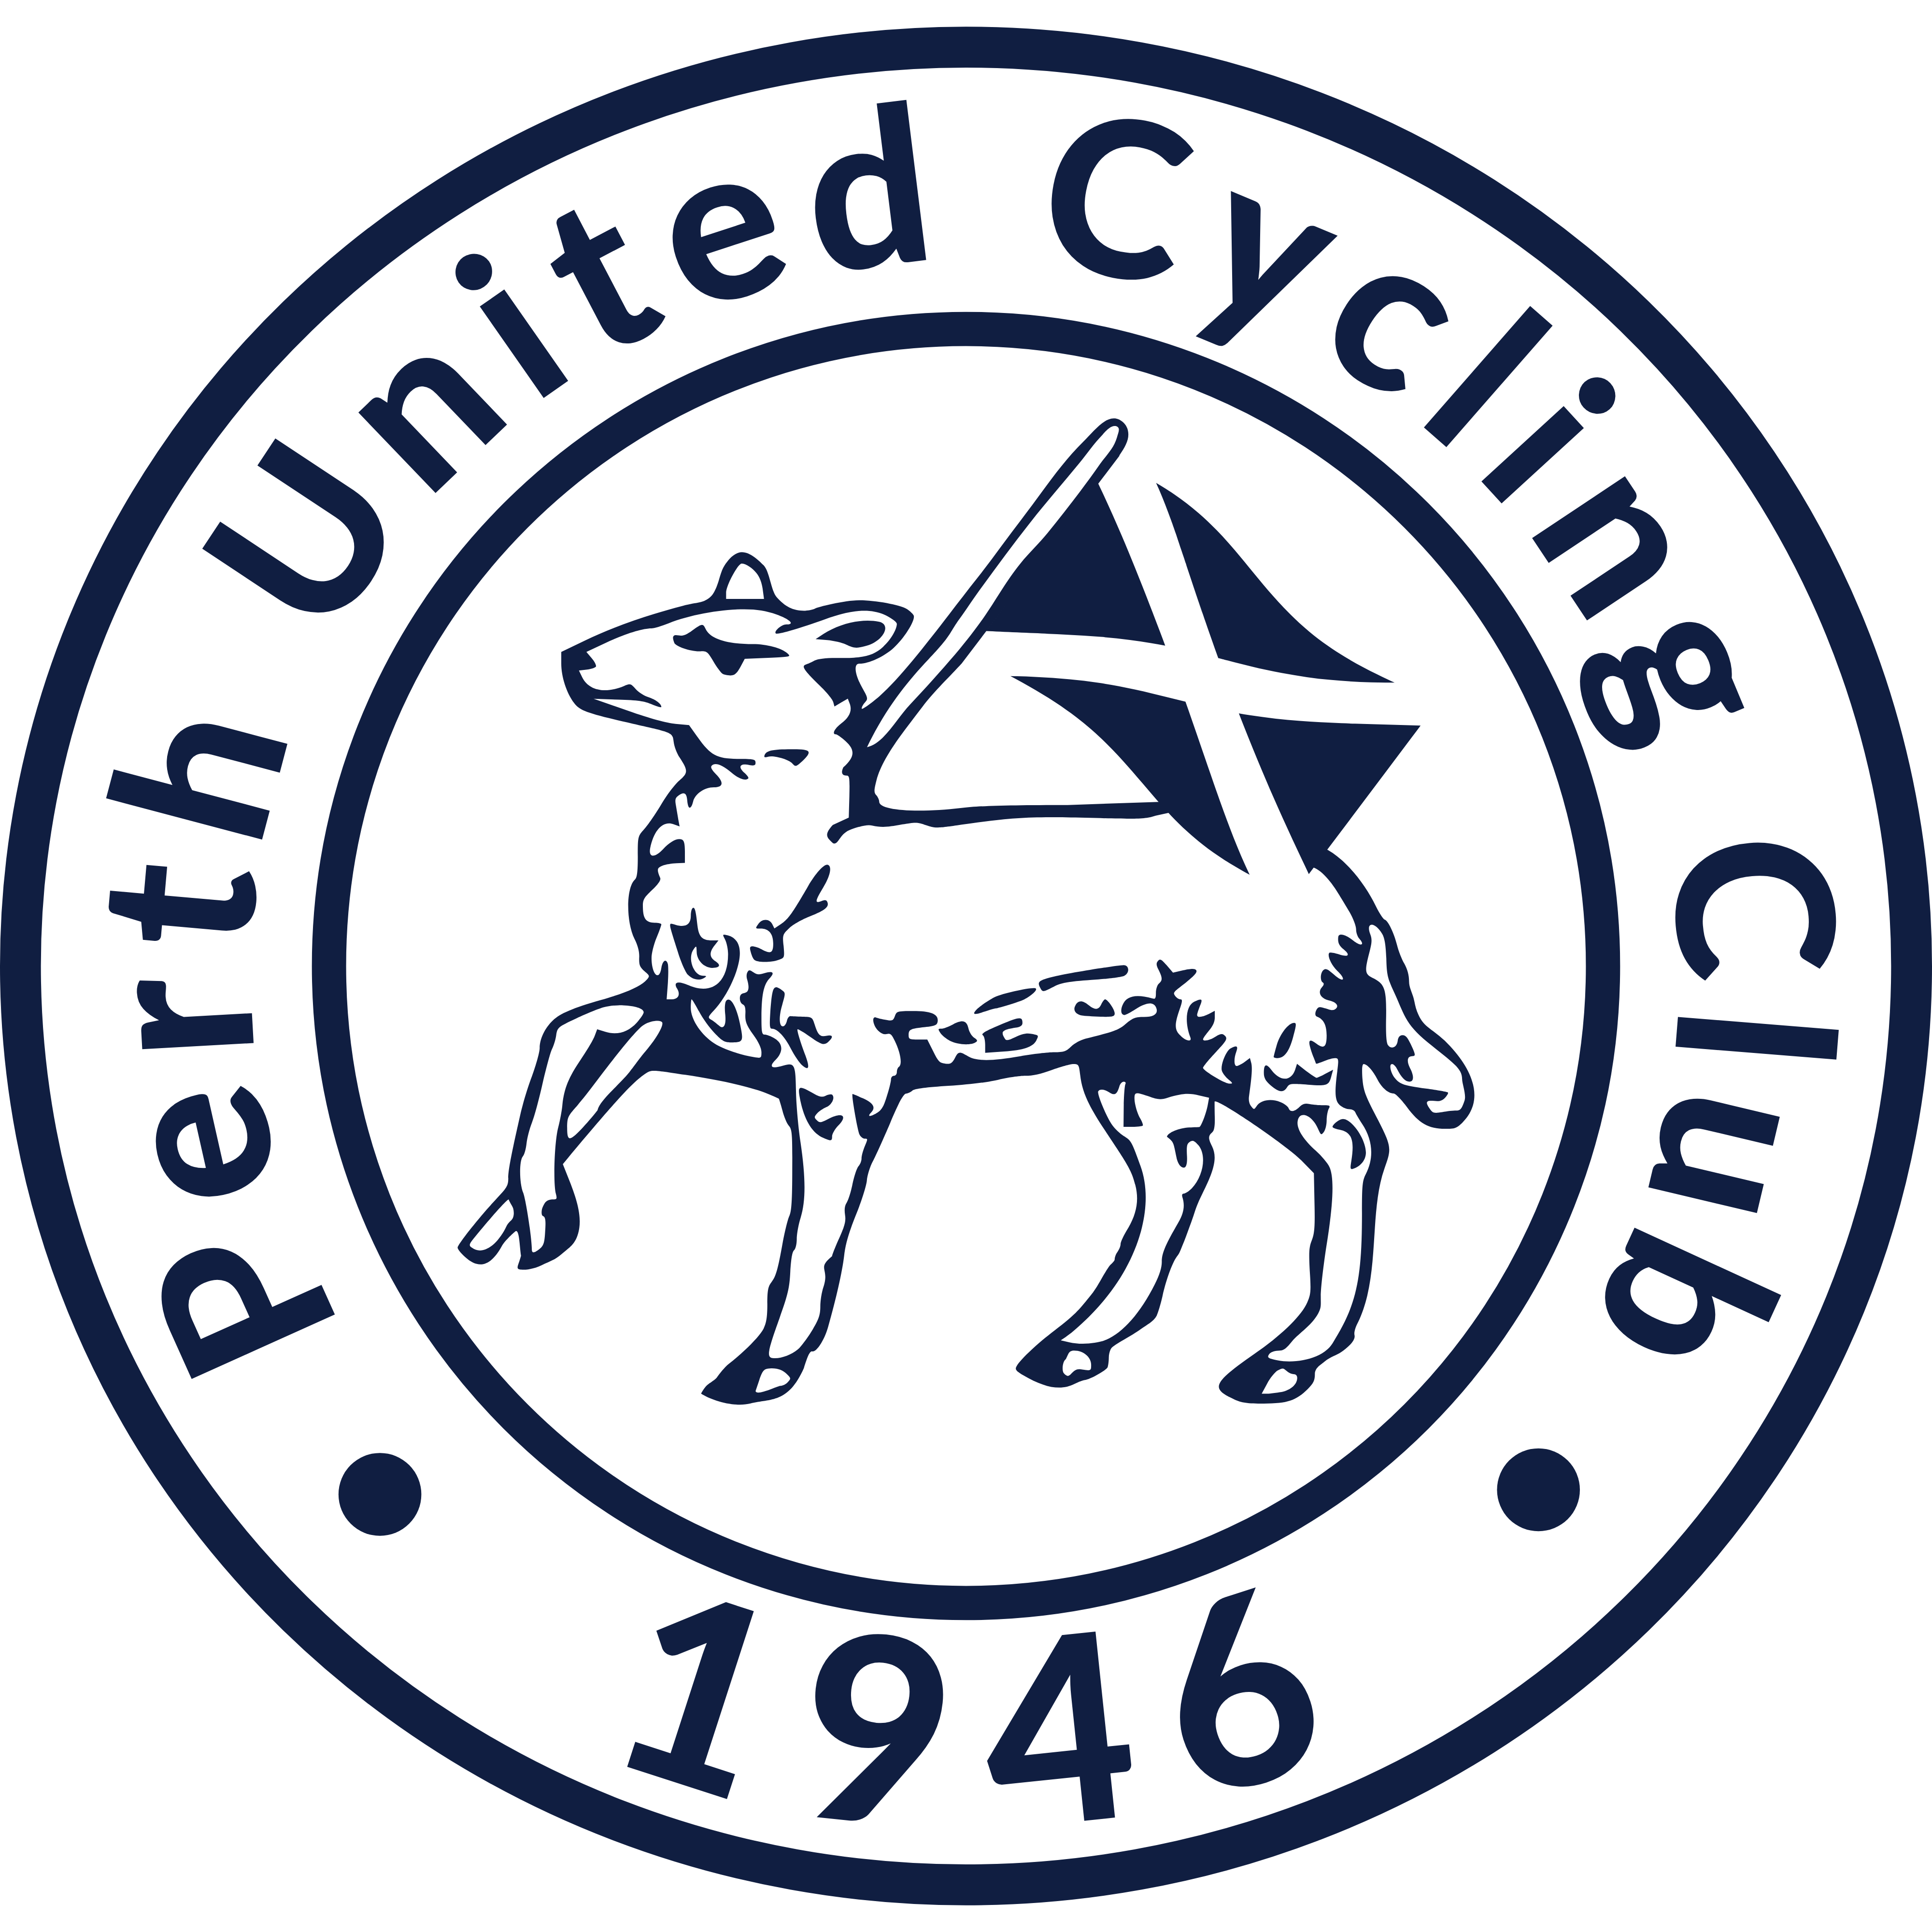 Perth United CC Shop